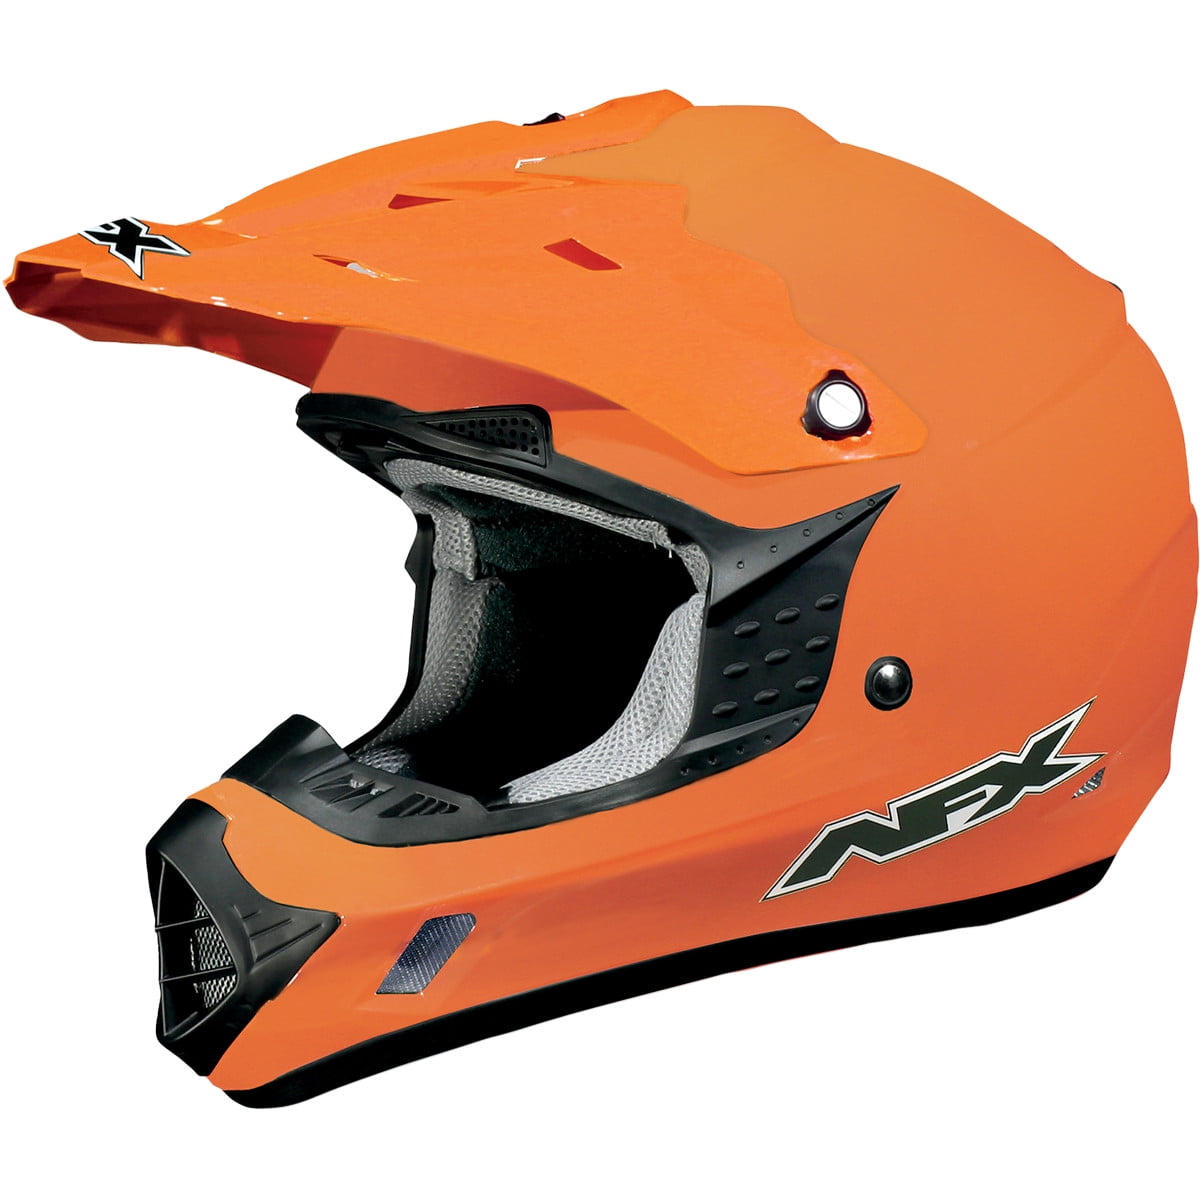 Orange Medium Race-Driven Cyclone ATV MX Motocross Dirt Bike Quad Off-road Helmet 